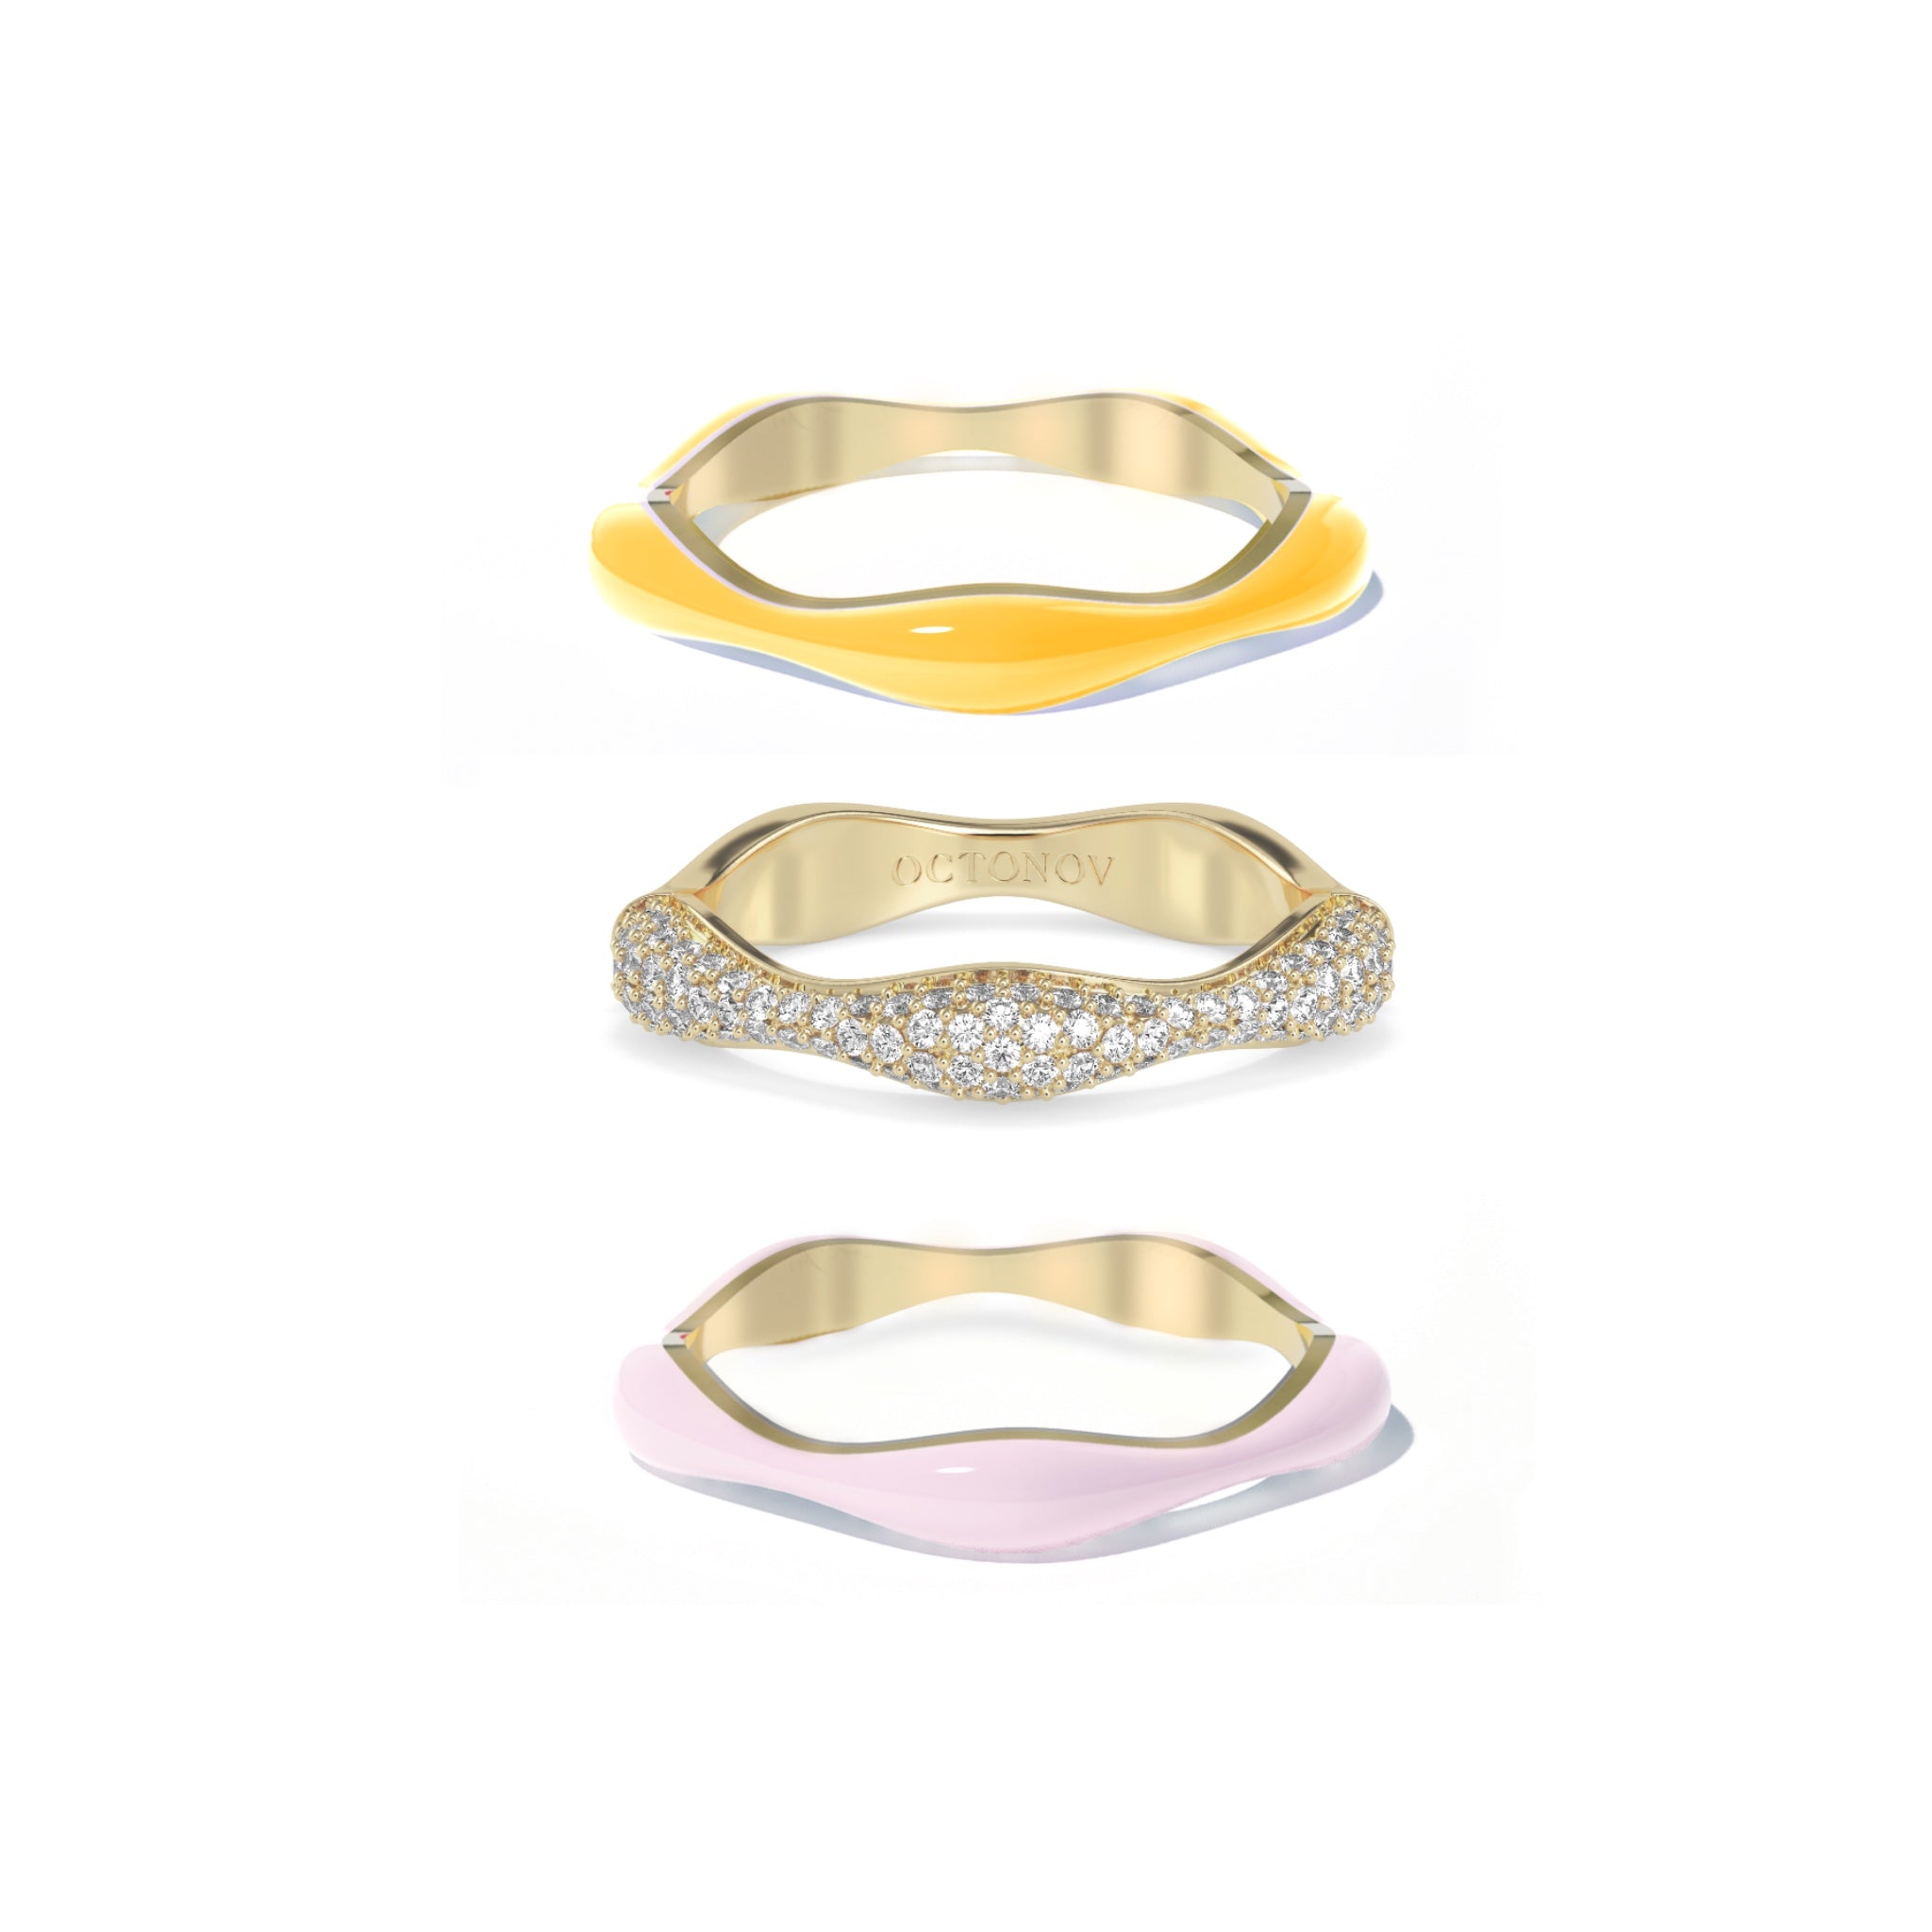 Sunset Sorbet Swirls Enamel & Diamond Swirls Stacker Ring Set in Yellow + Light Pink - Octonov 